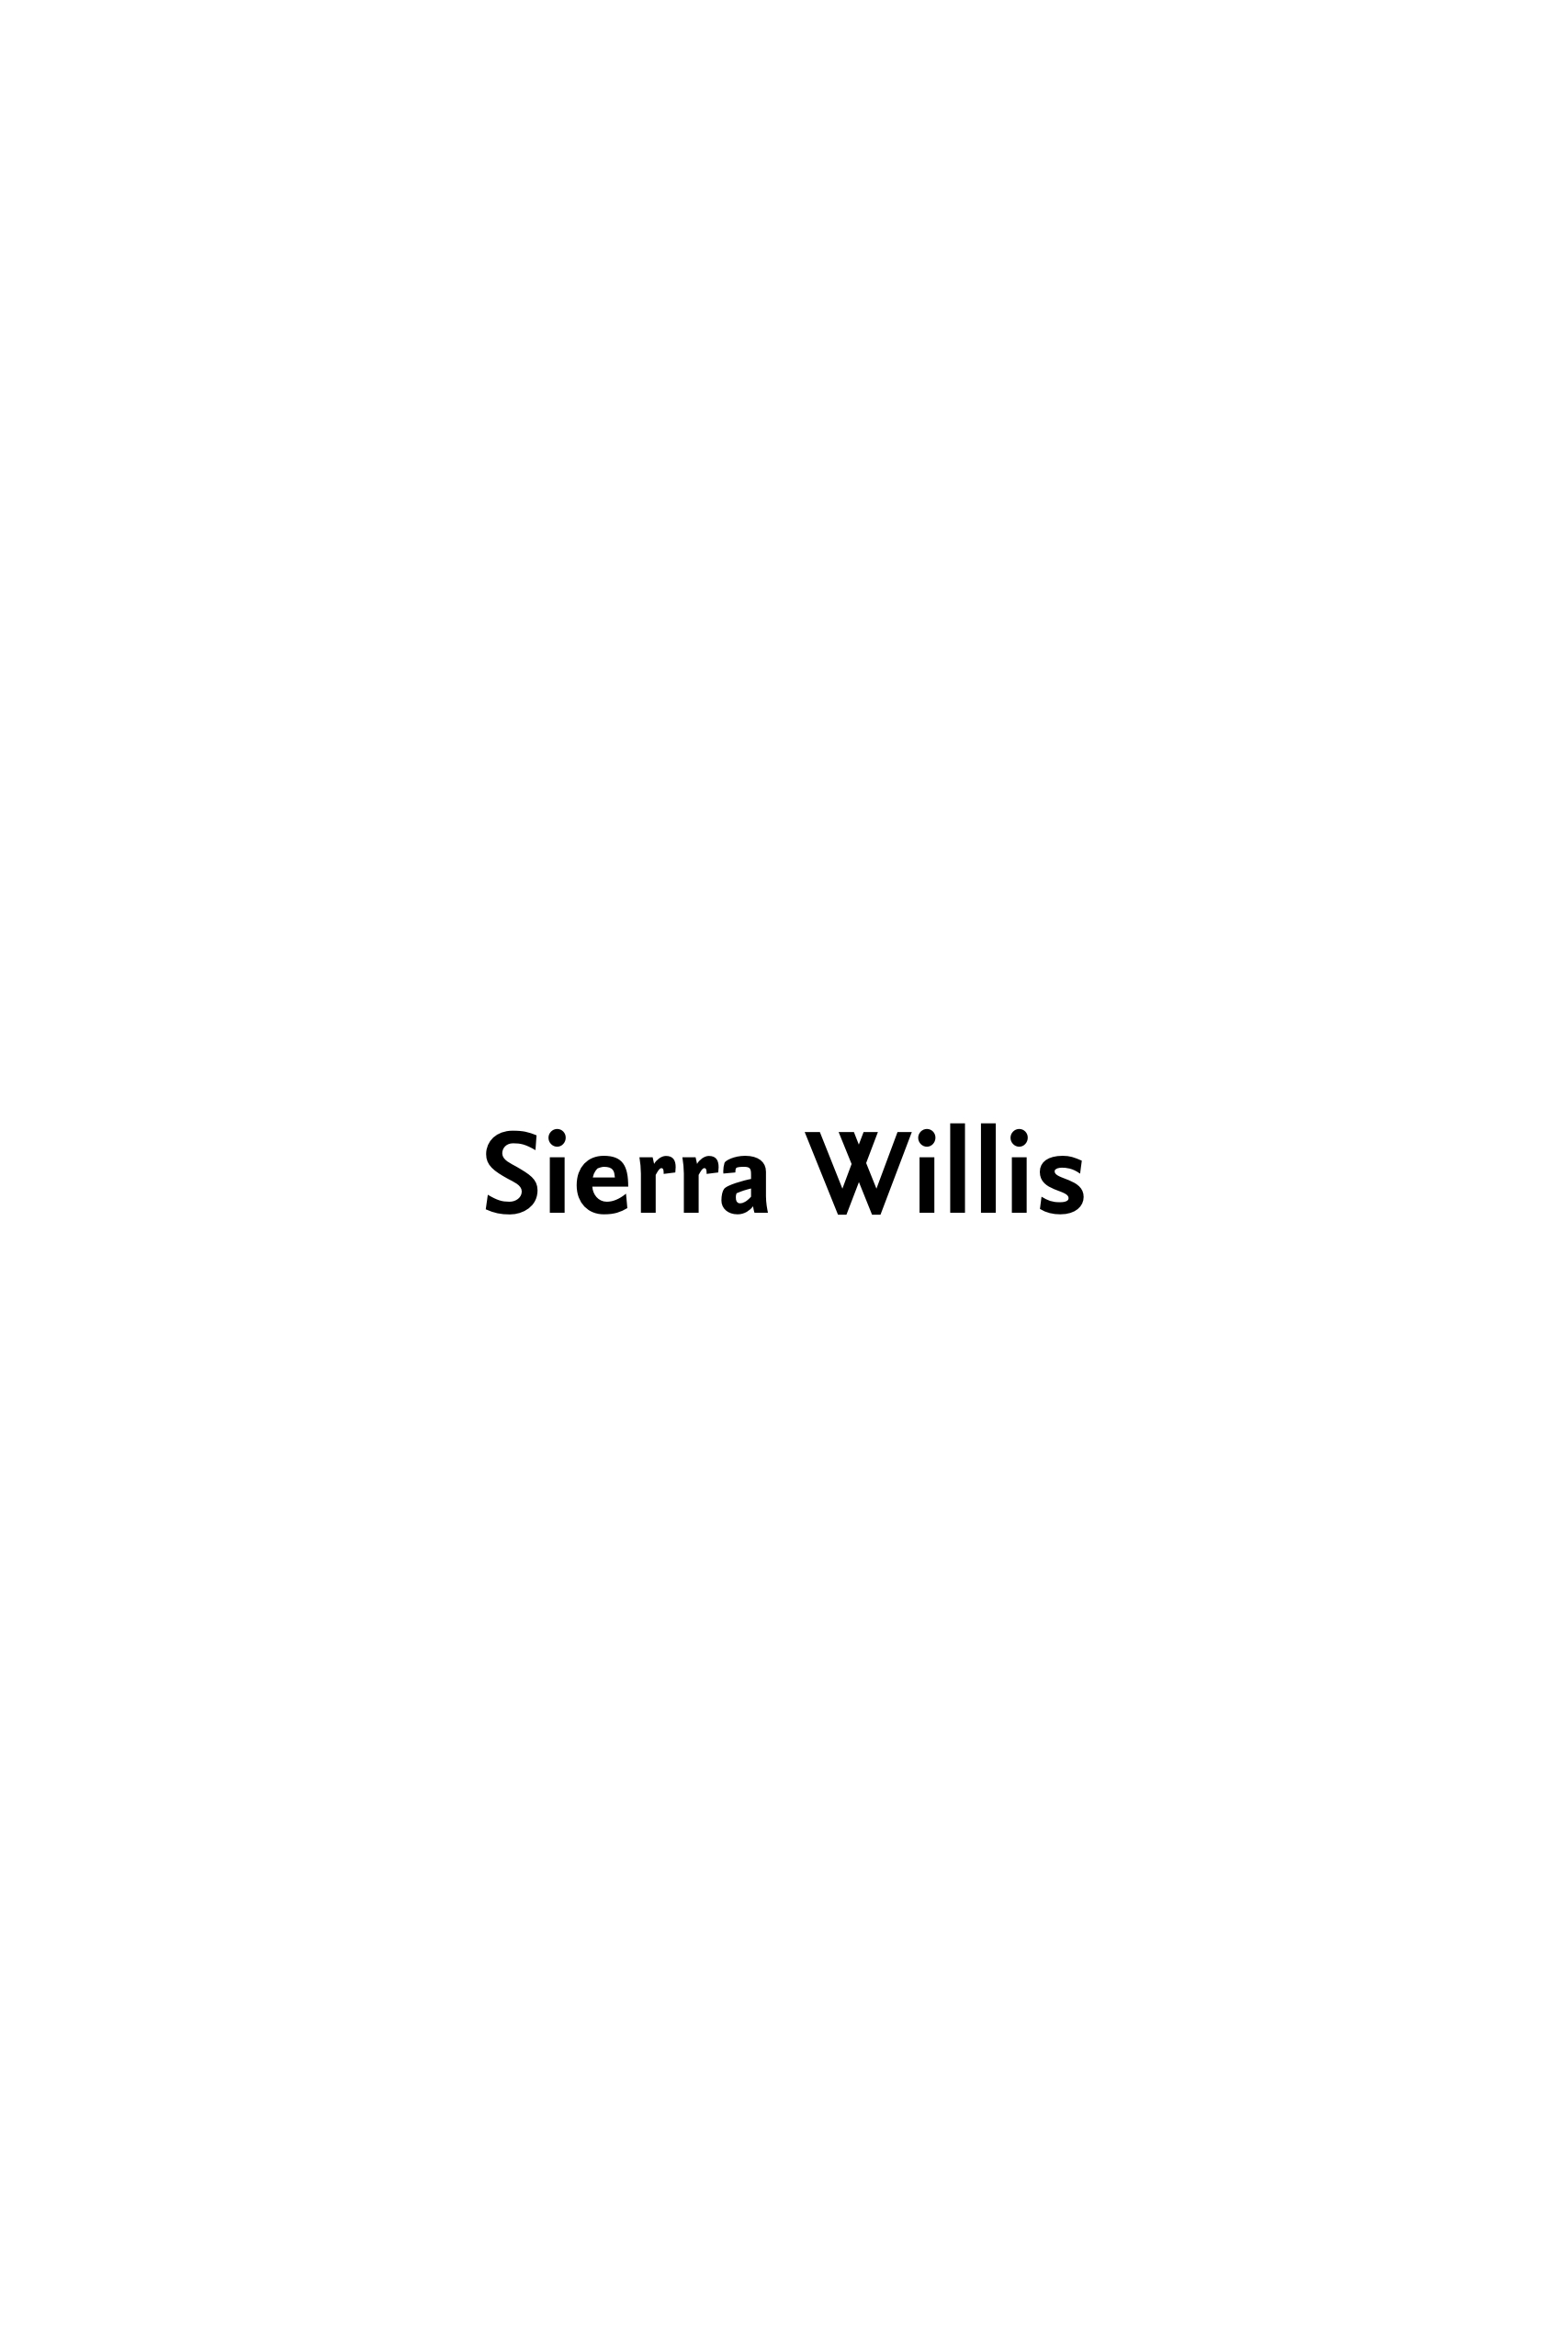 SIERRA WILLIS